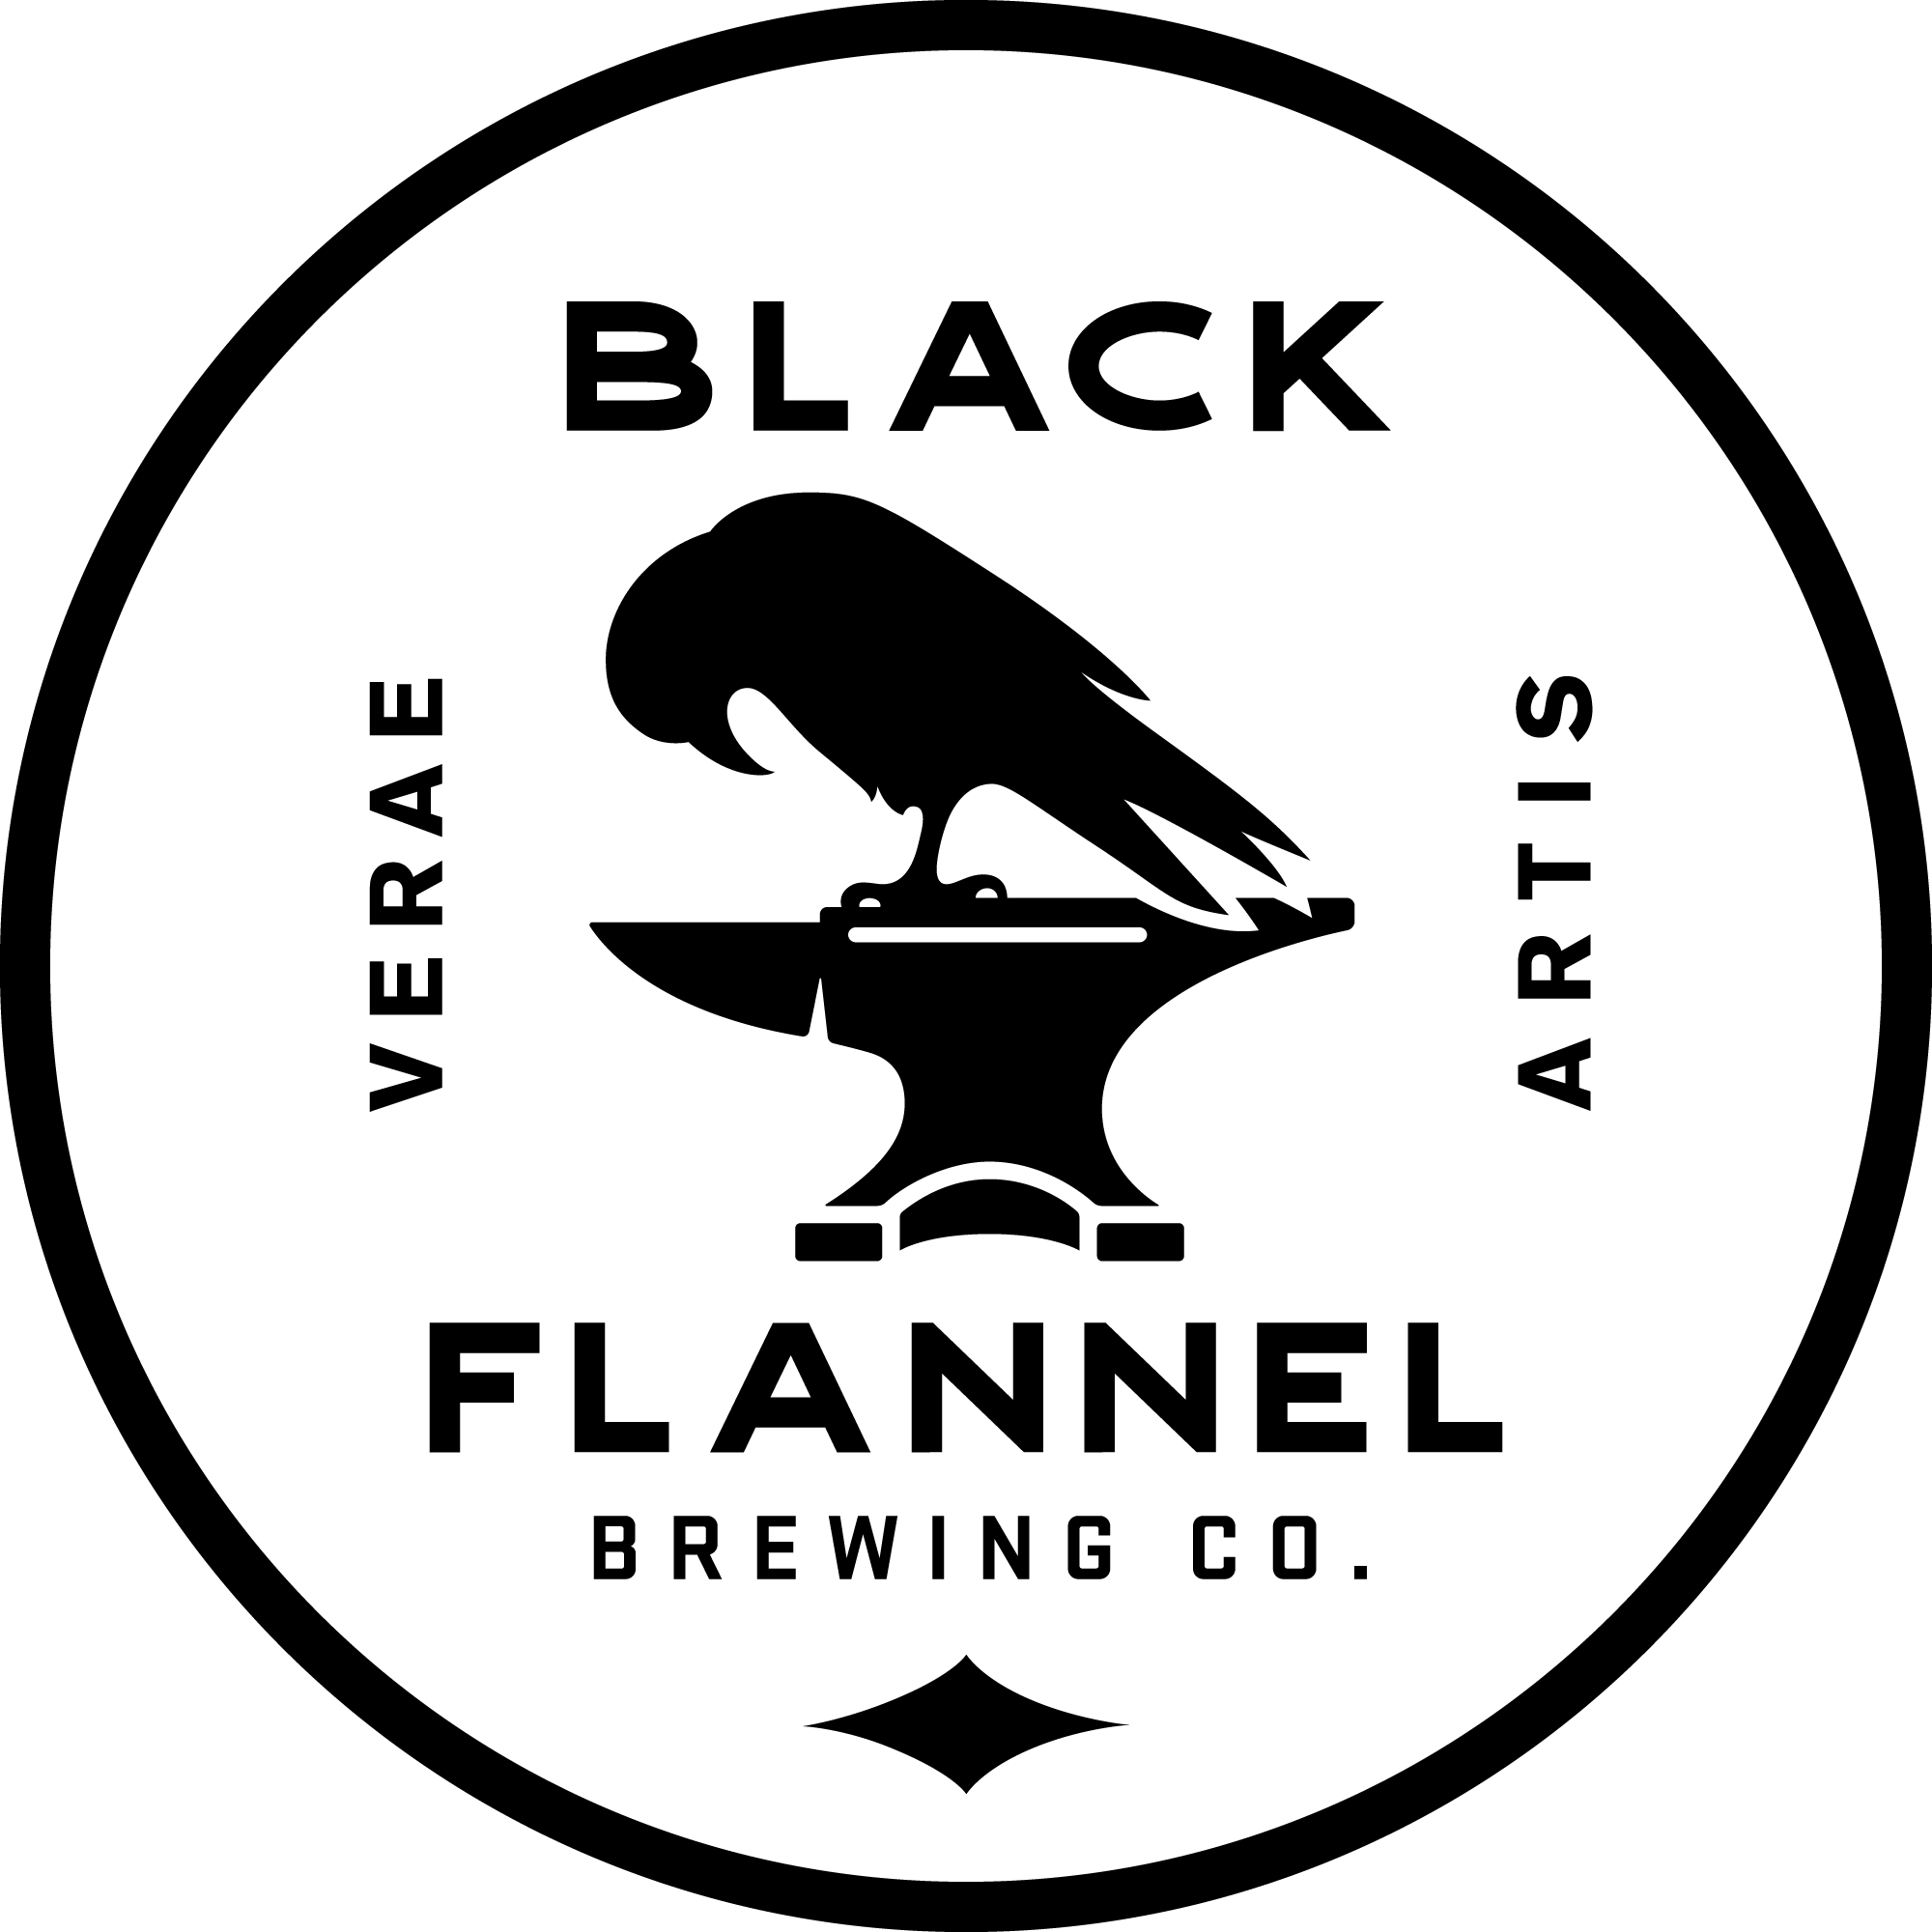 Black Flannel Brewing Company